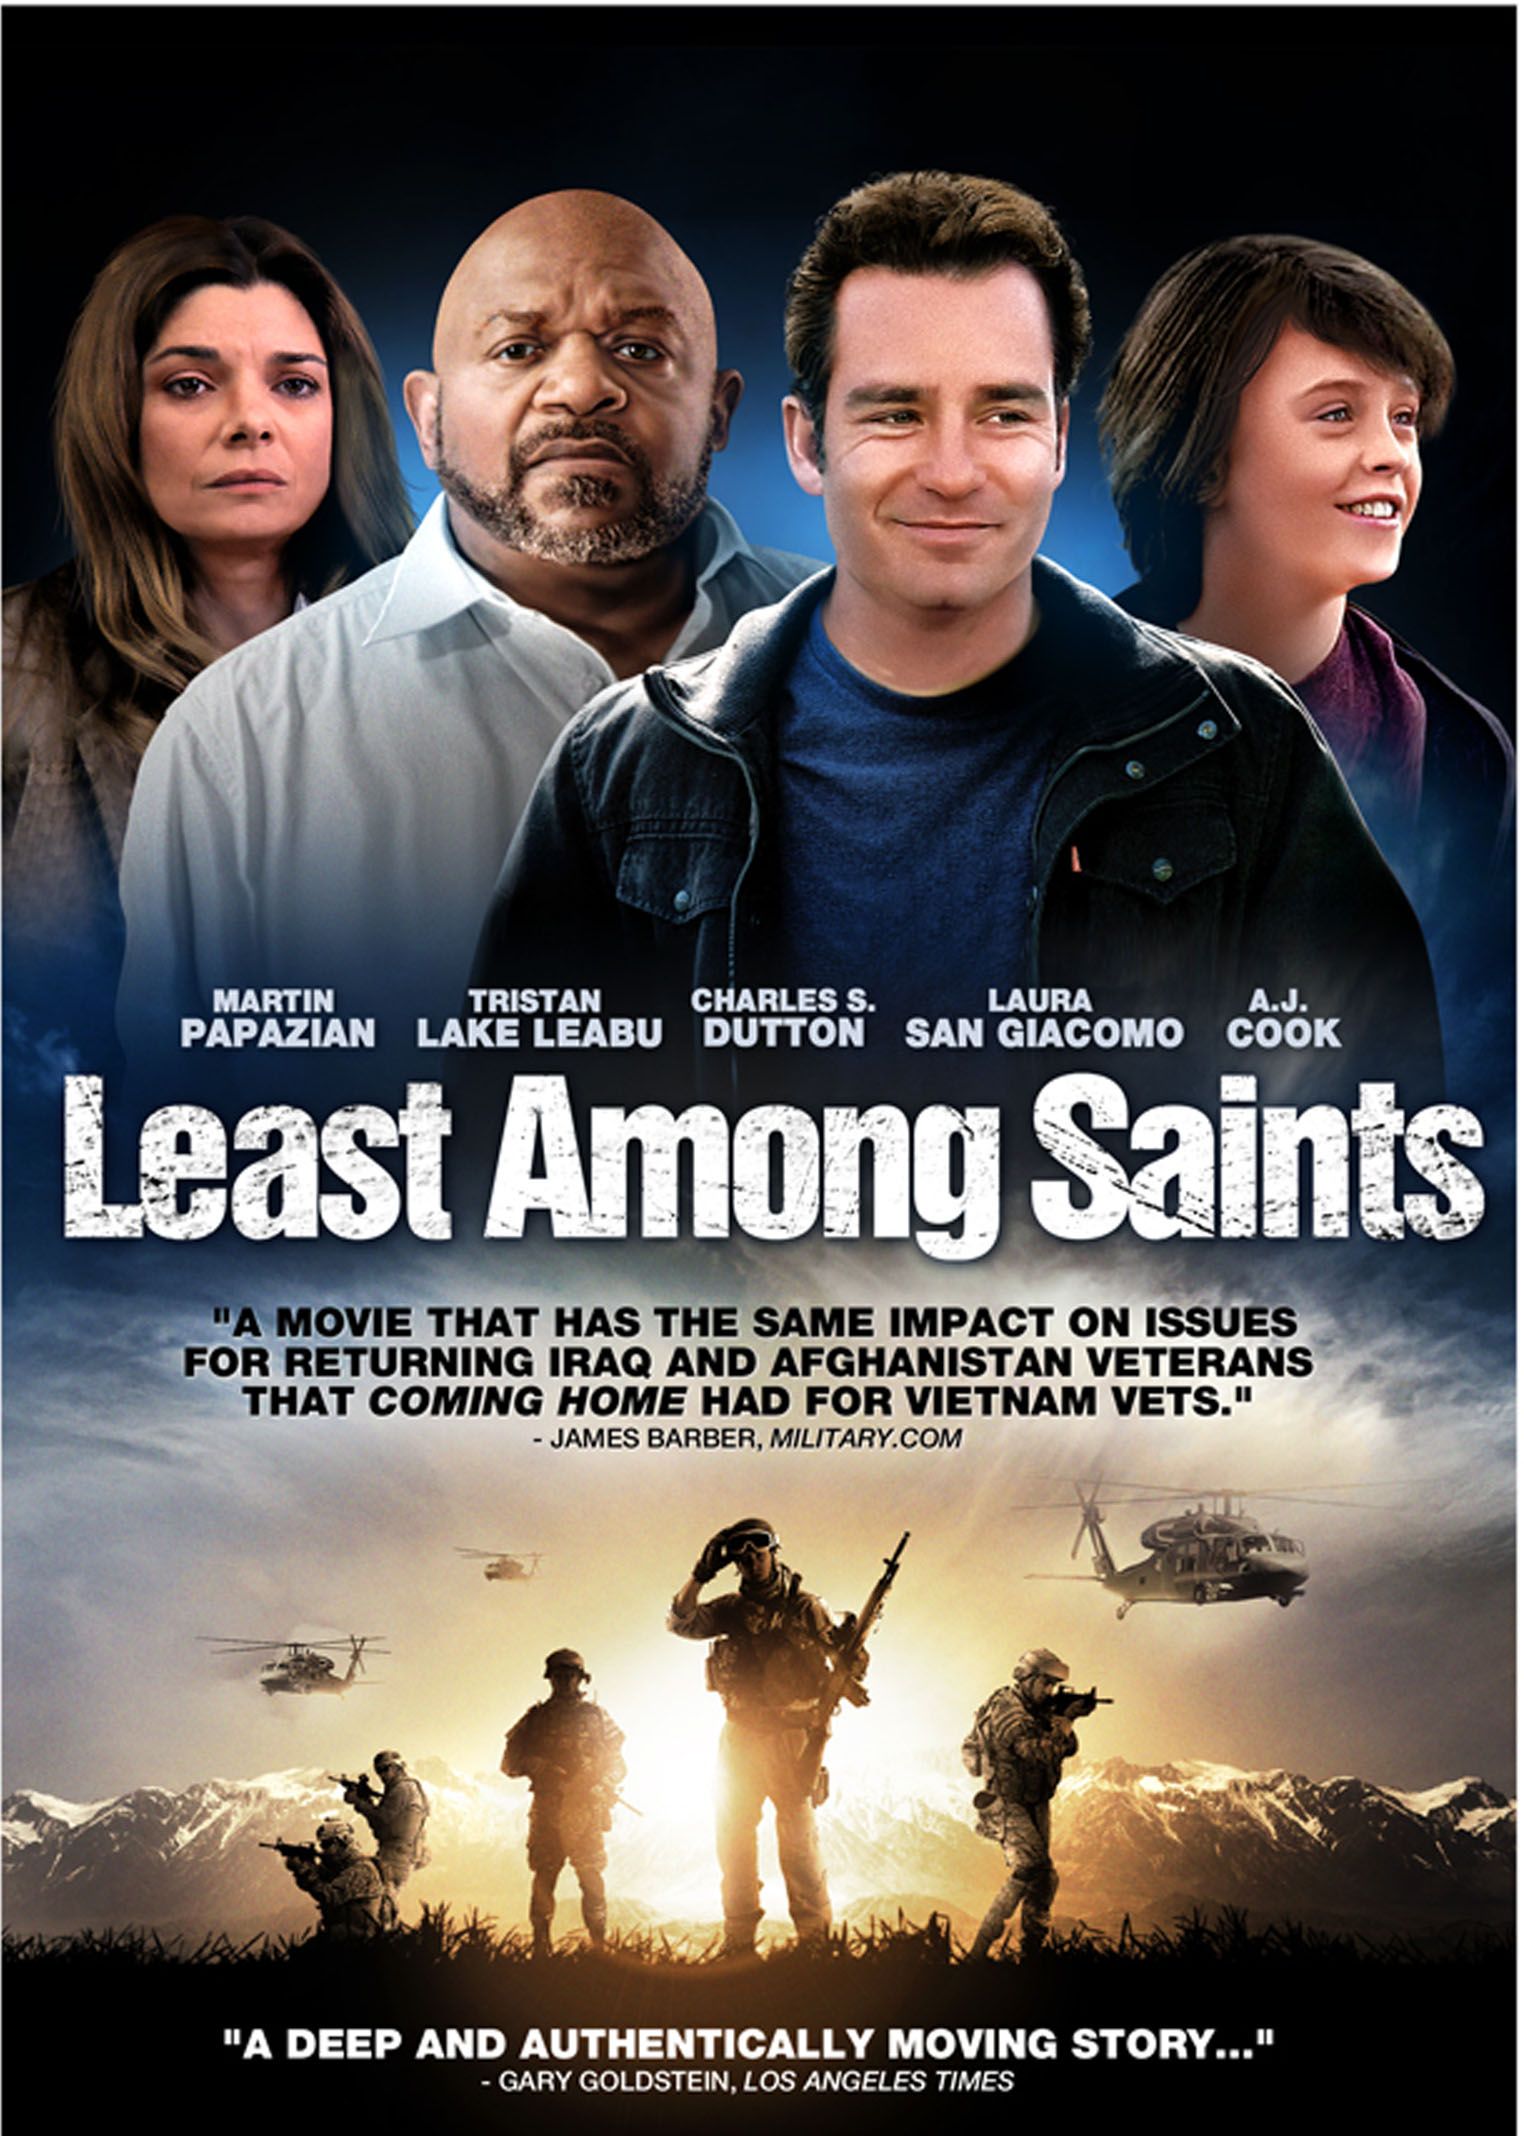 Least Among Saints DVD Poster